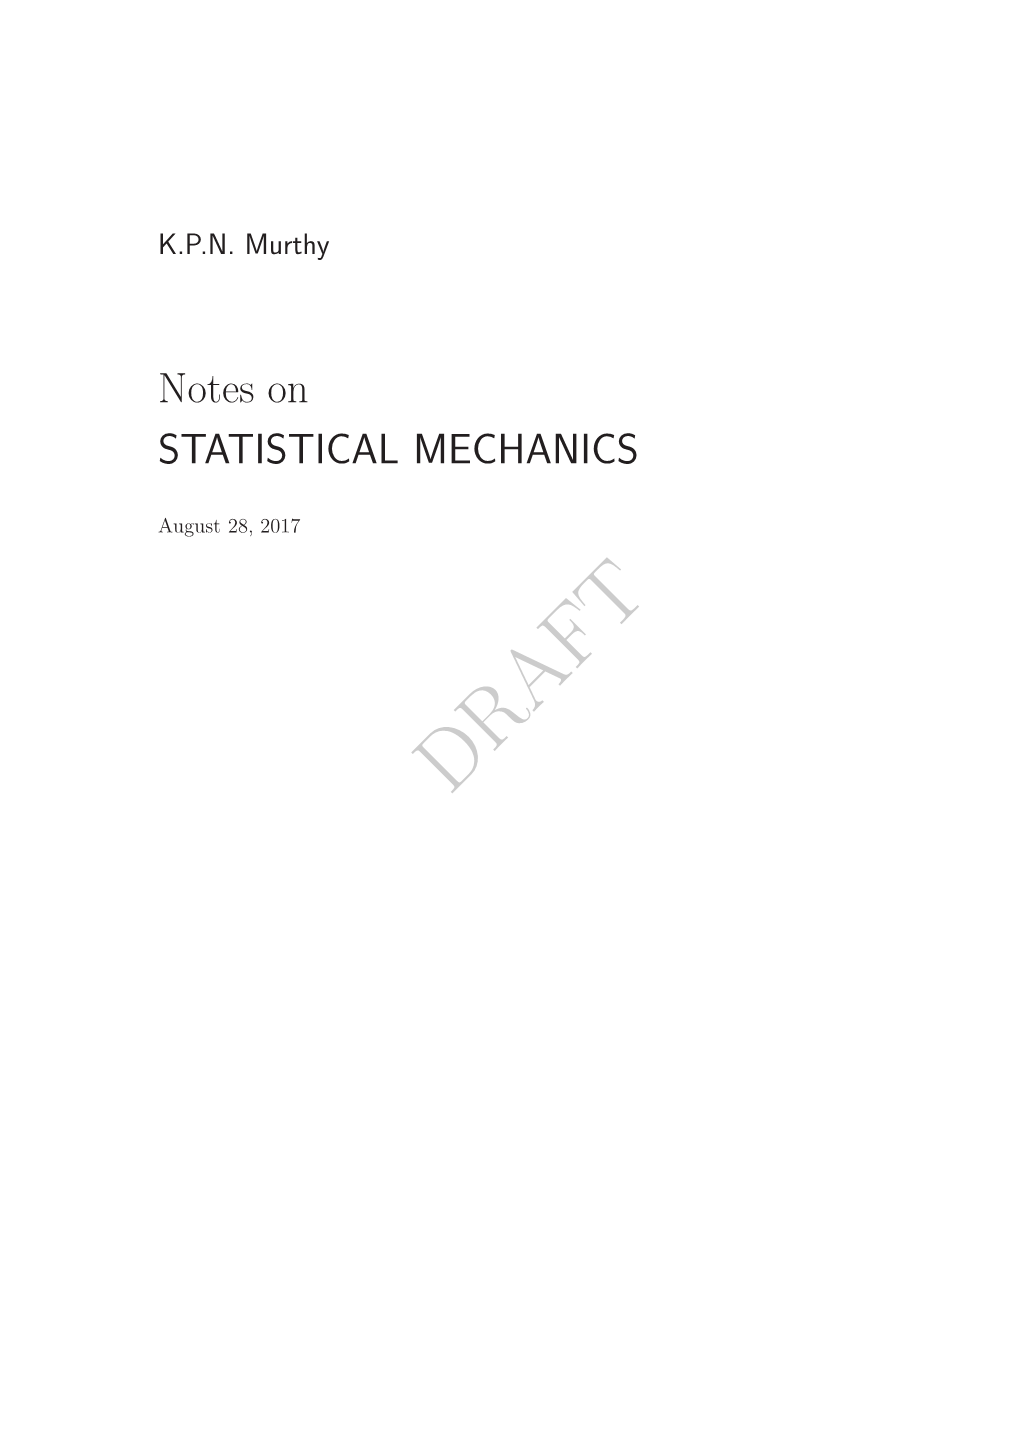 Notes on STATISTICAL MECHANICS